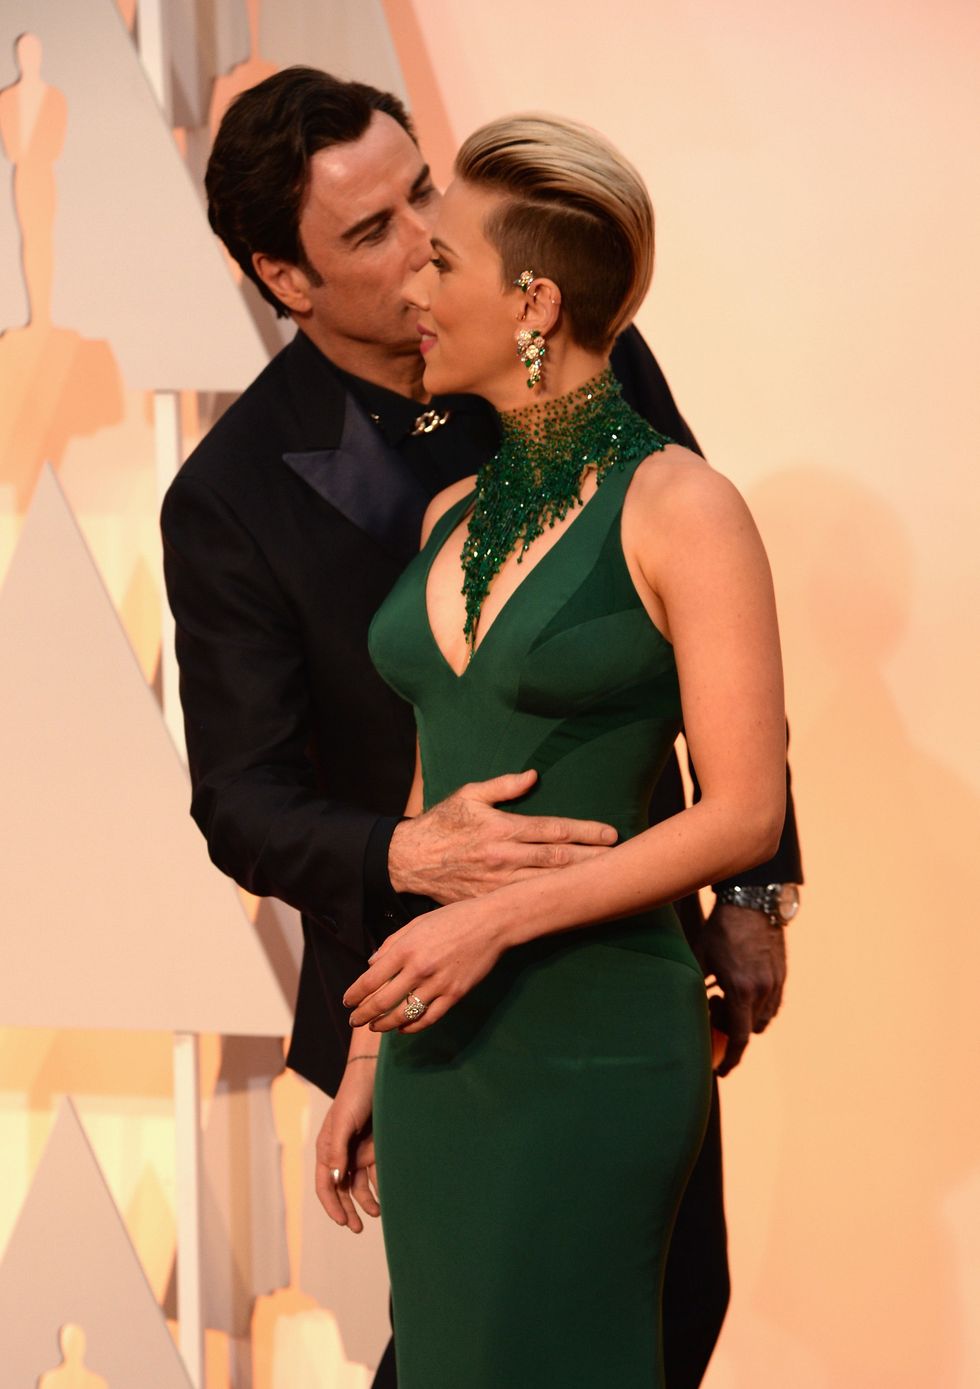 FINALLY Scarlett Johansson explains WTF John Travolta was doing